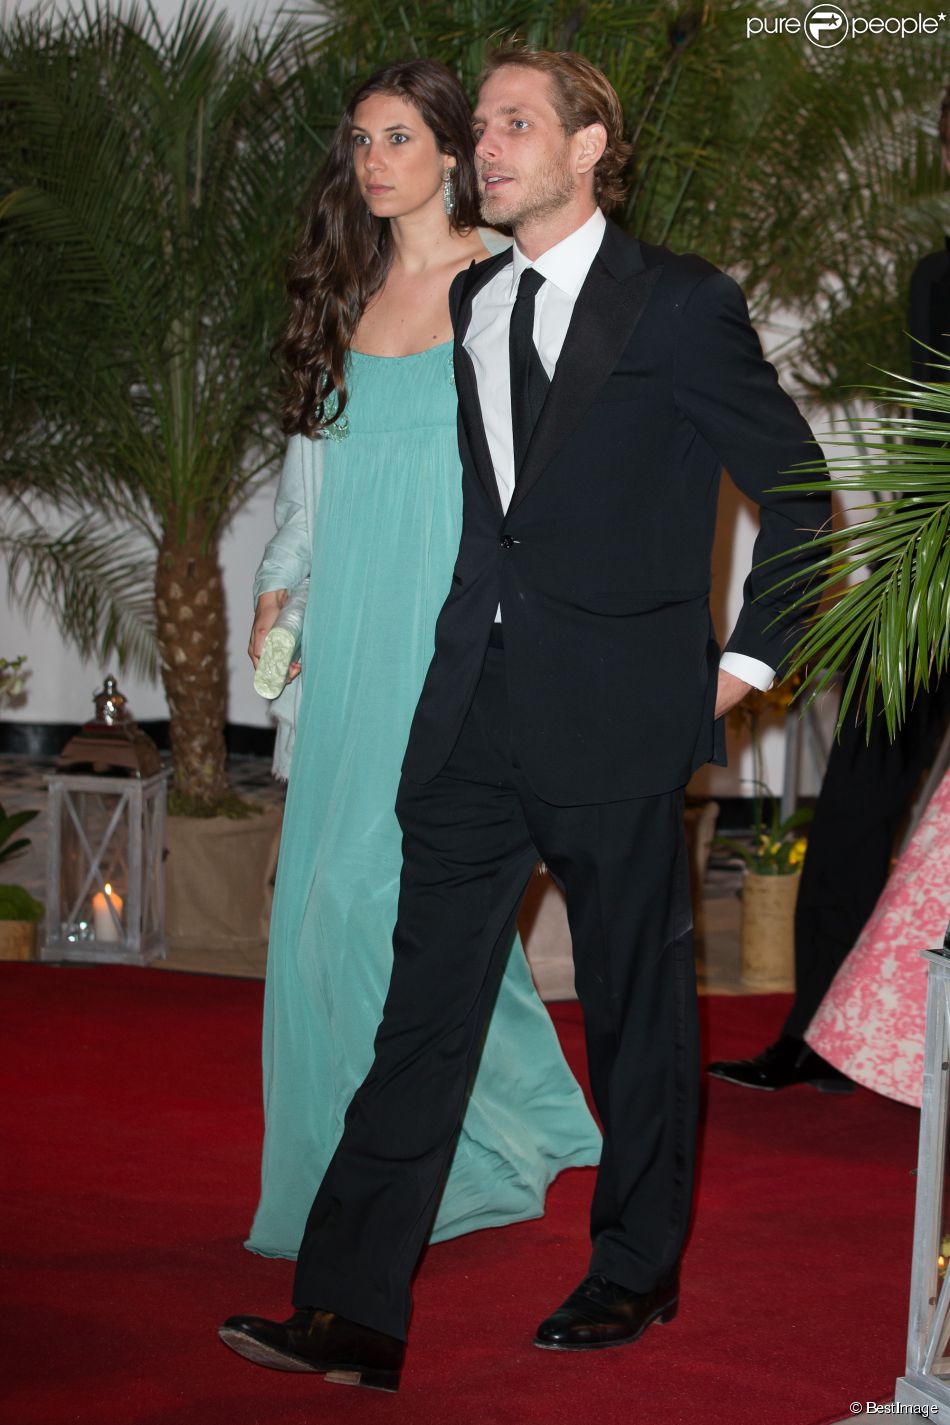  Andrea Casiraghi et sa femme Tatiana Santo Domingo lors du gala du Grand prix de Formule 1 au Sporting de Monaco, le 25 mai 2014.  